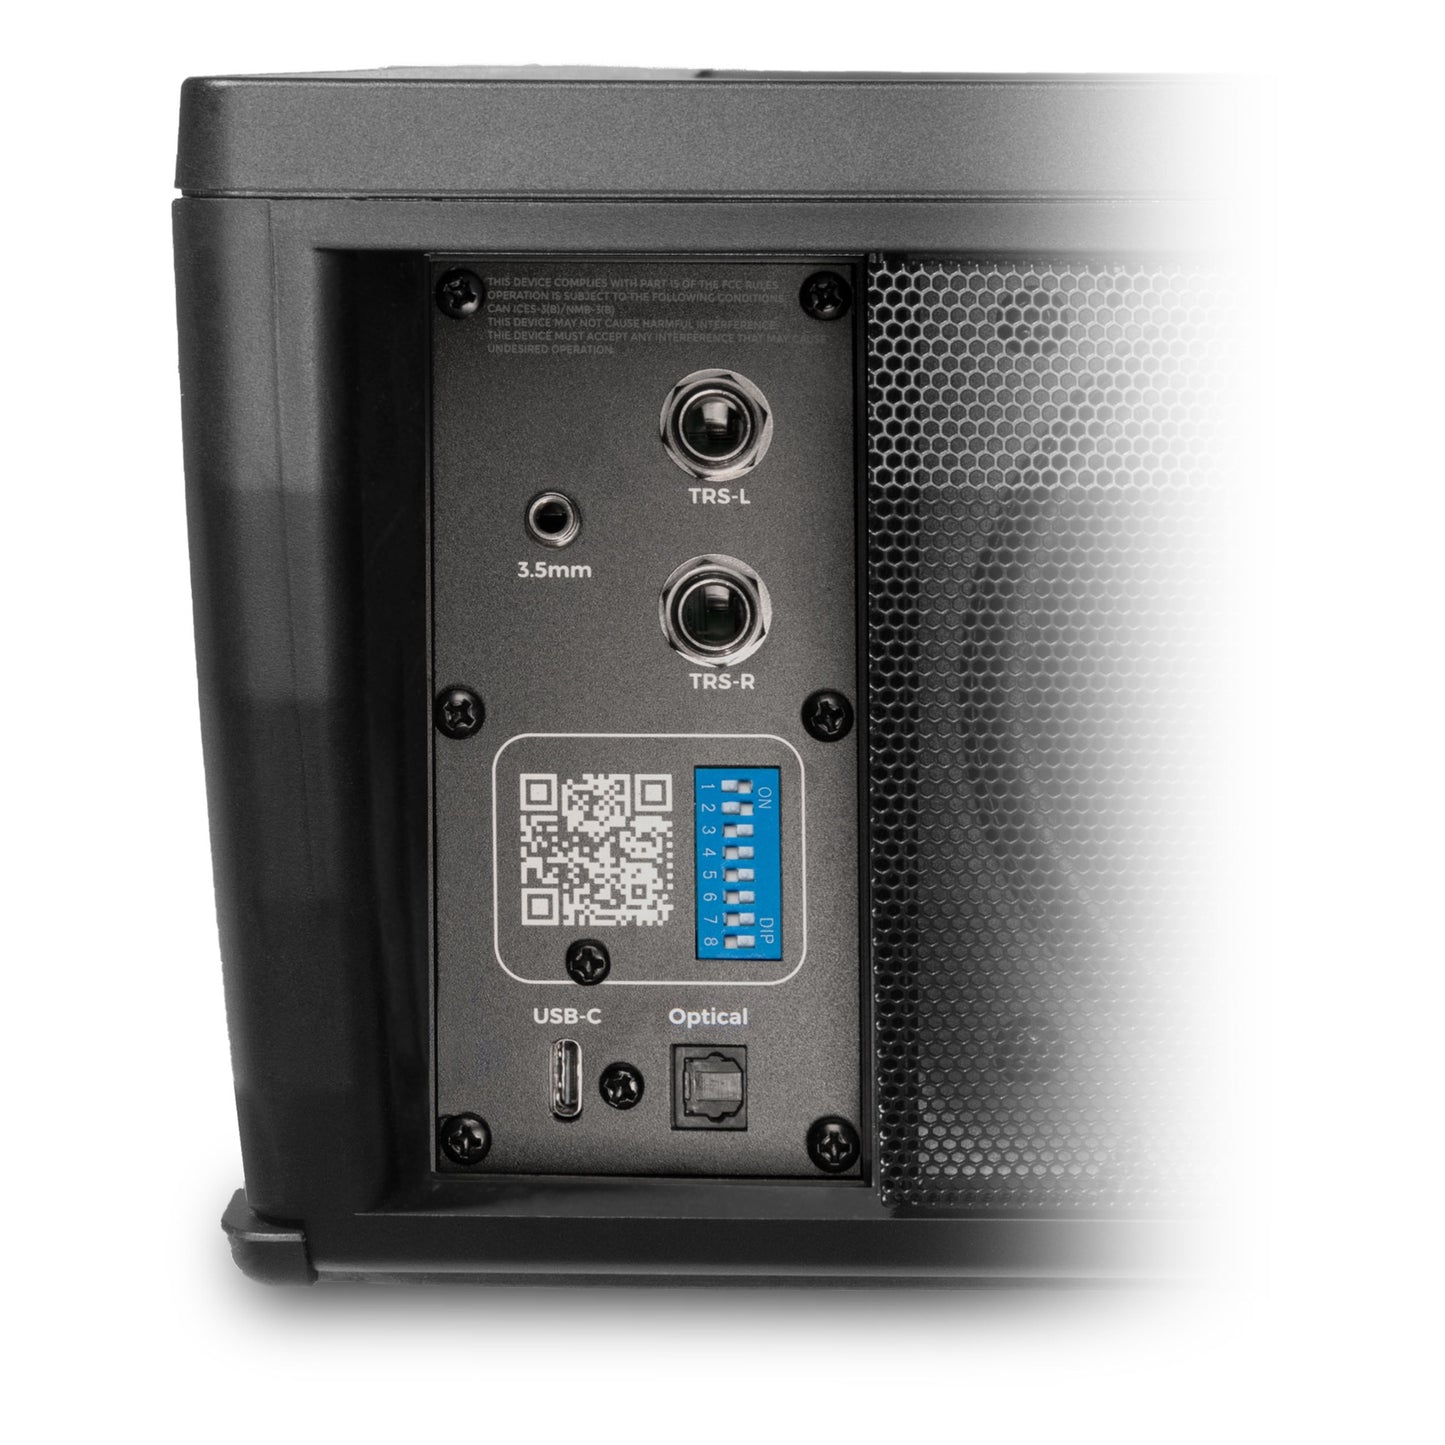 Kali Audio IN-UNF Ultra Nearfield 3 Way Studio Monitor System